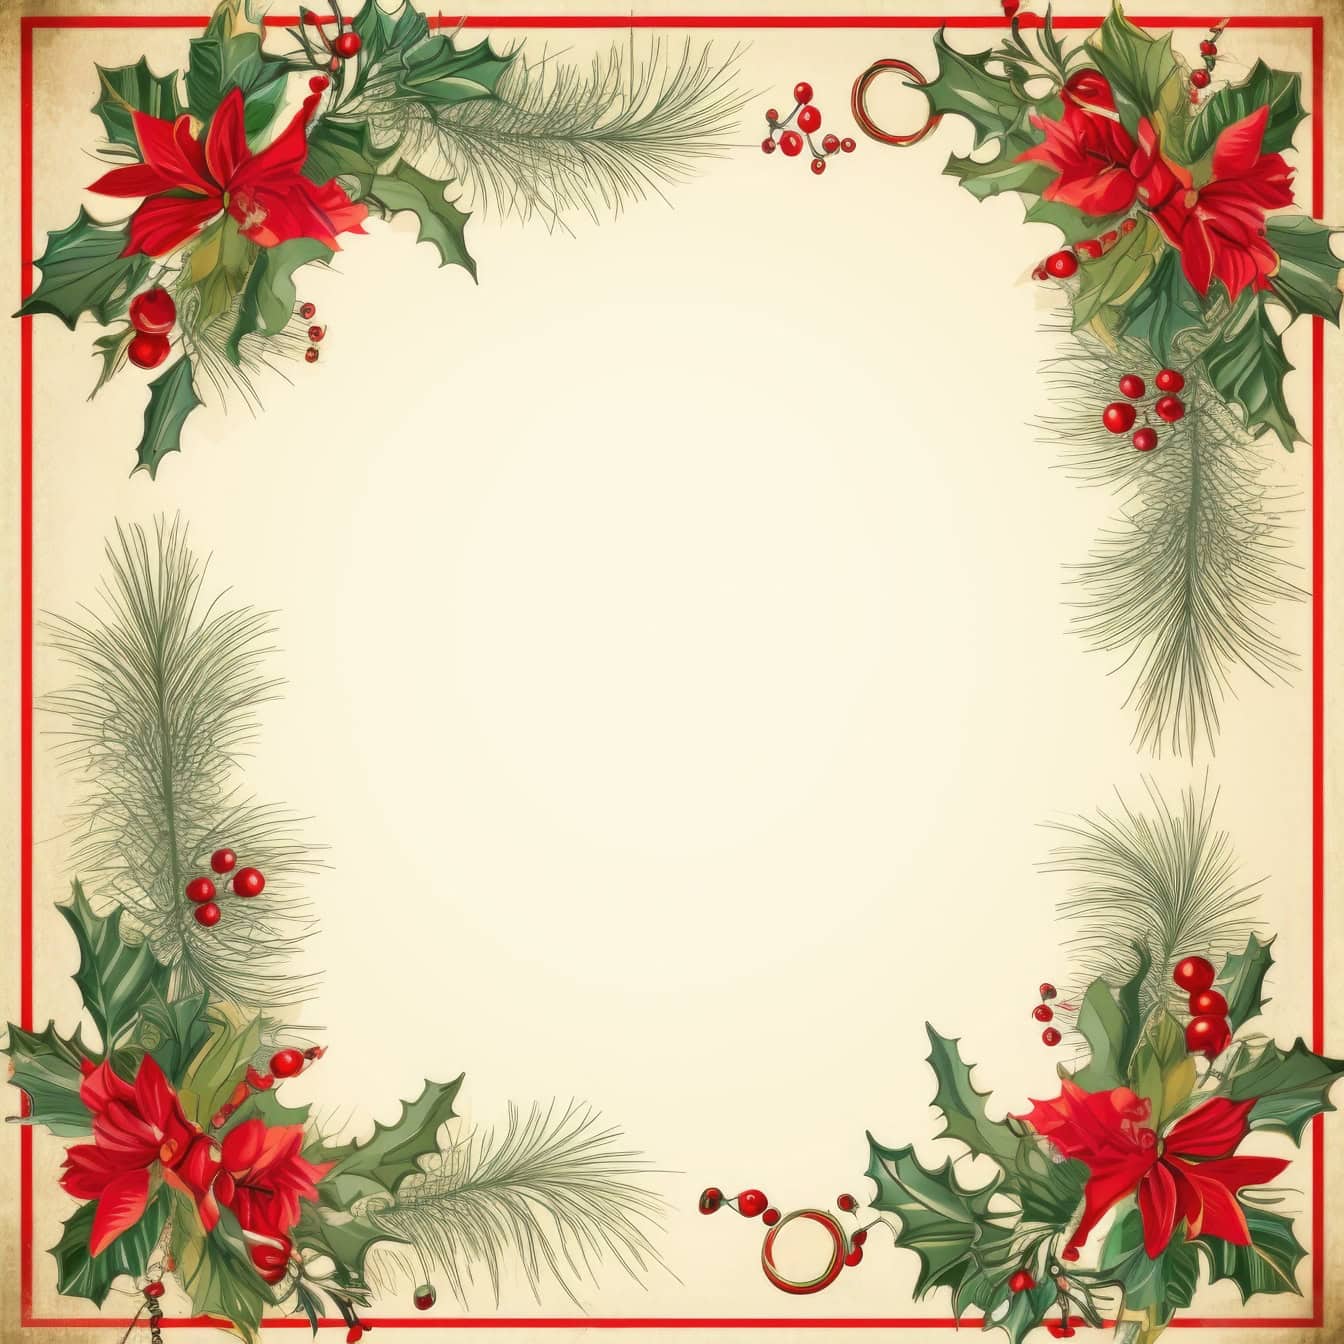 Sier kerst- en nieuwjaarswenskaartsjabloon in retrostijl met vierkant frame met rode bessen en groene bladeren